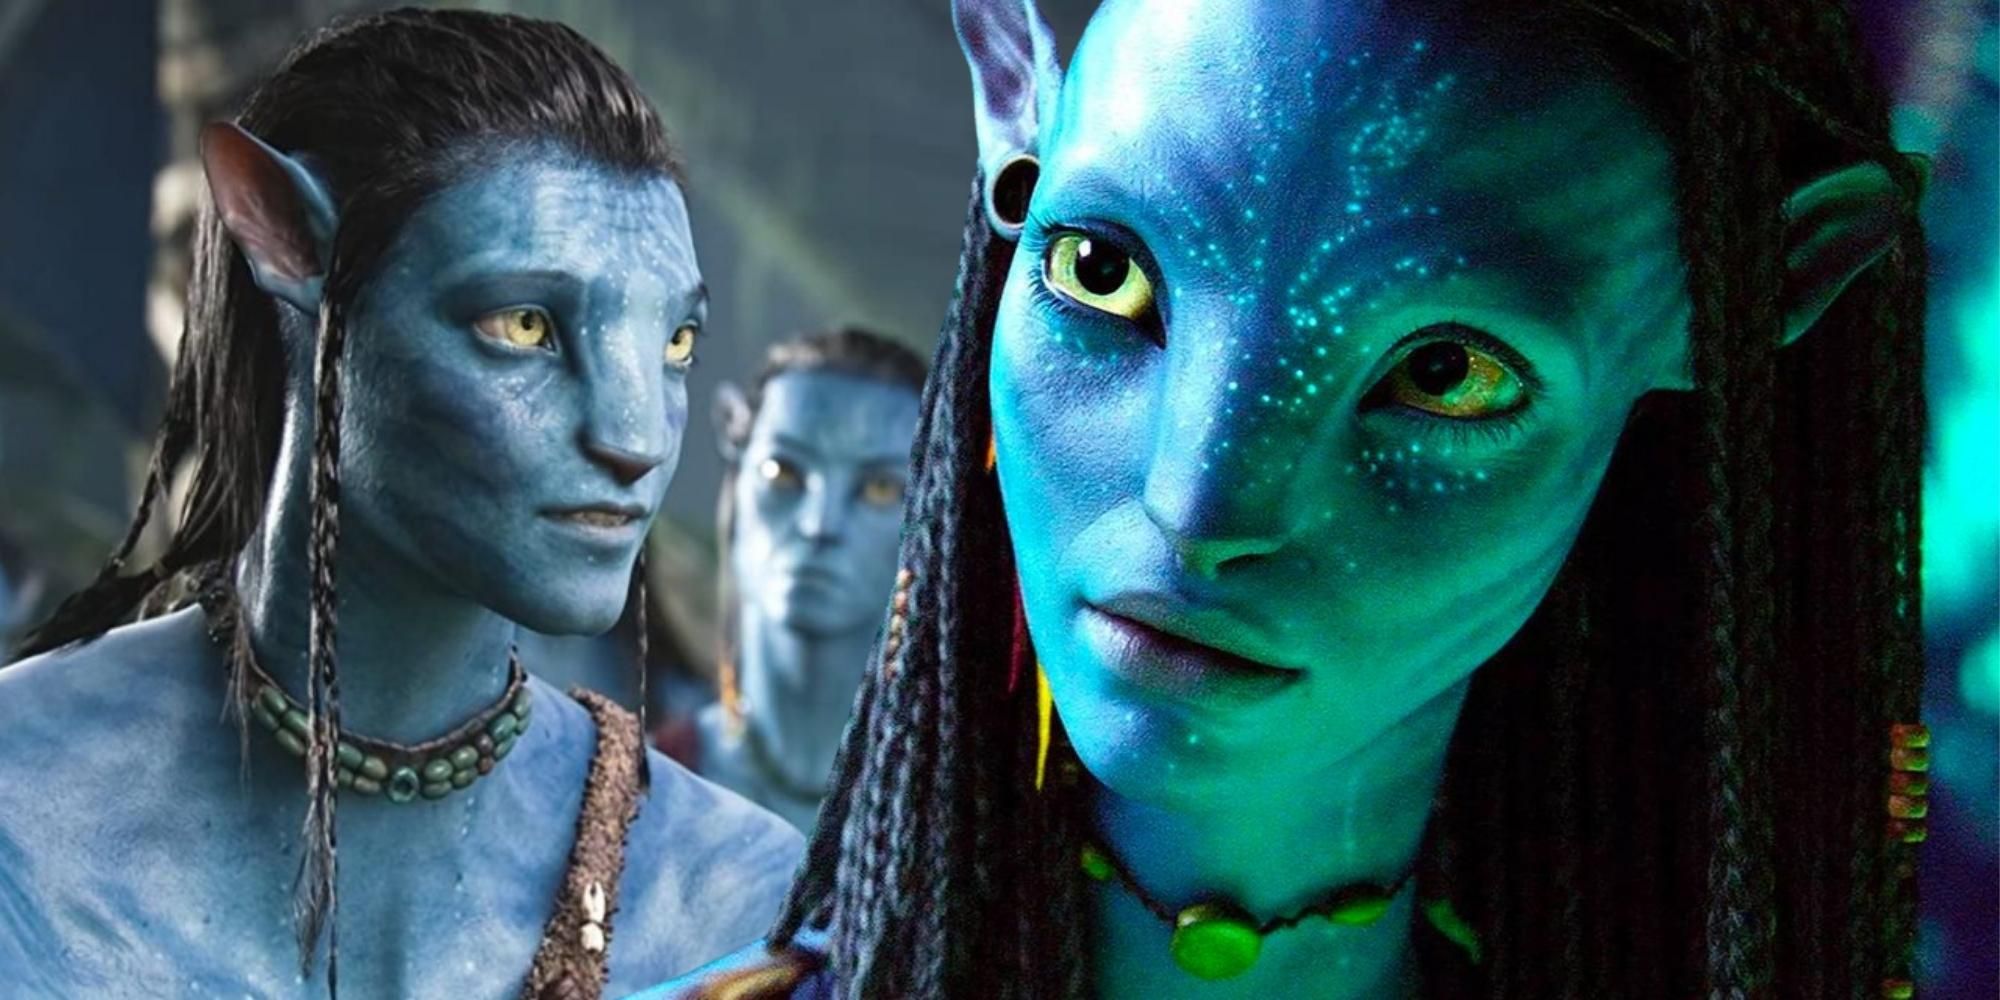 Sam Worthington as Jake Sully and Zoe Saldana as Neytiri in Avatar 2